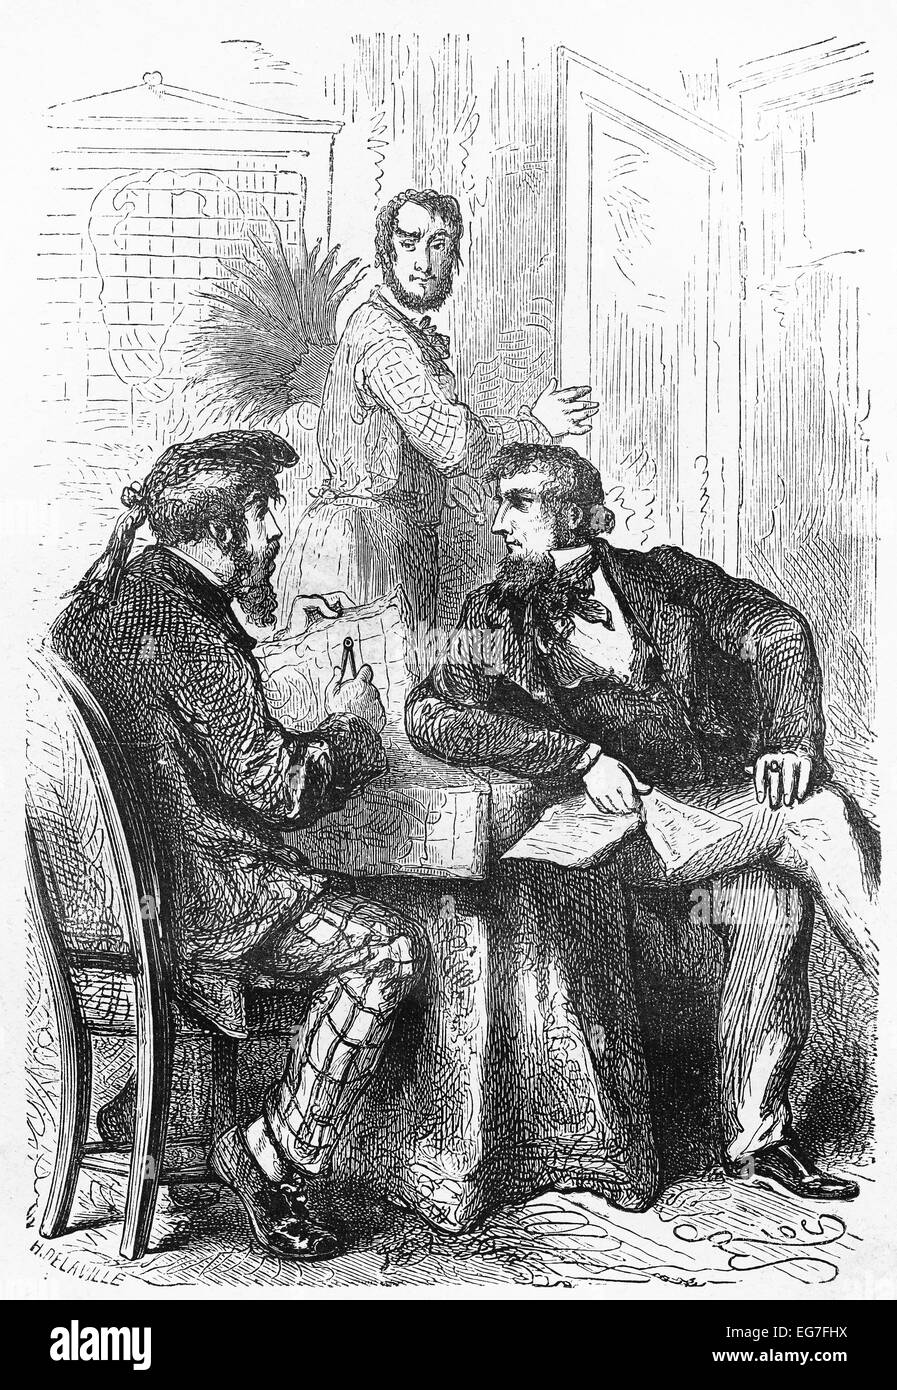 Dick consulente la carte - Immagine da Jules Verne Foto Stock